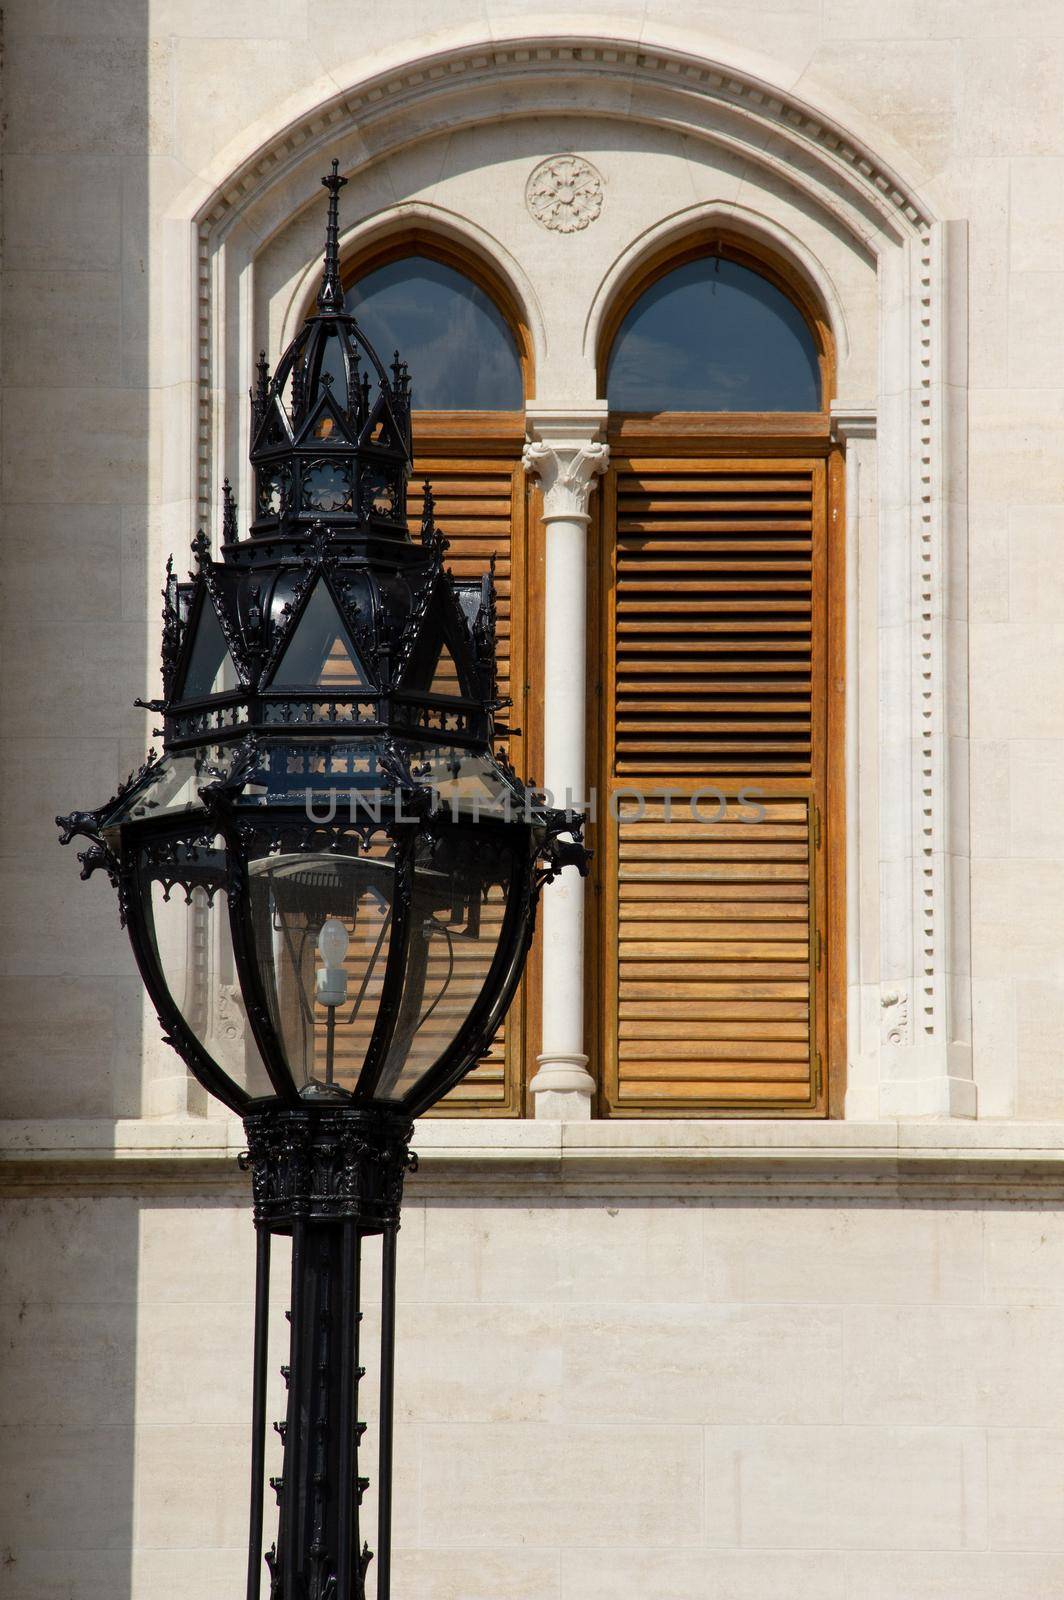 Street lamp with window. Parliament, Budapest, Hungary by gallofoto